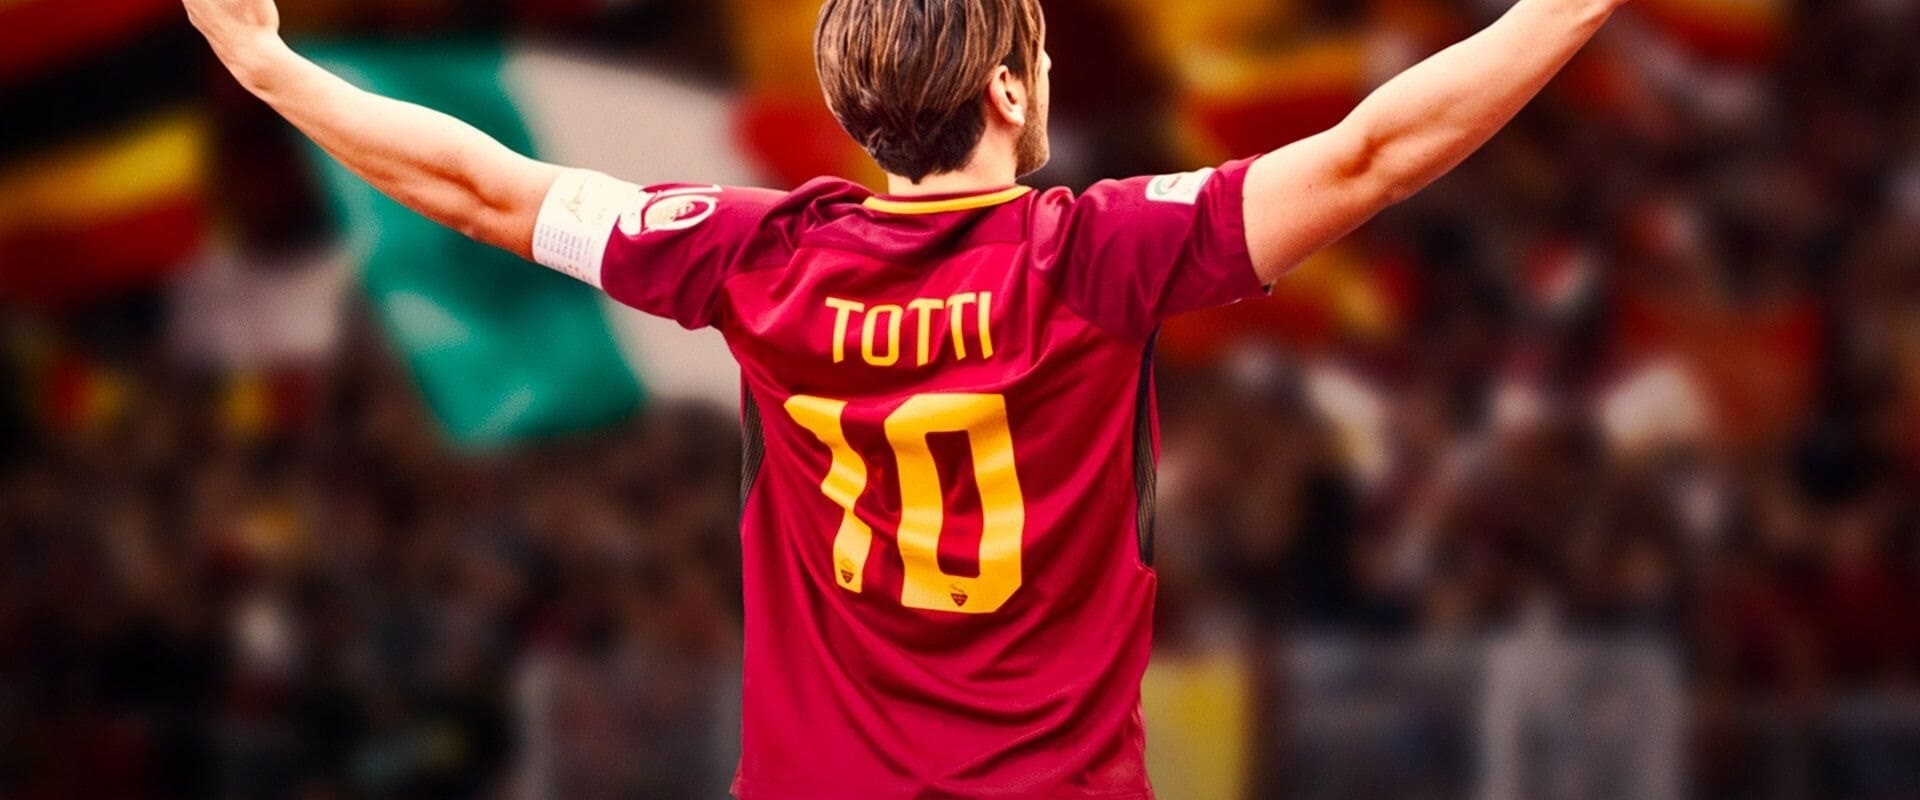 Speravo de morì prima – La Serie su Francesco Totti [HD]